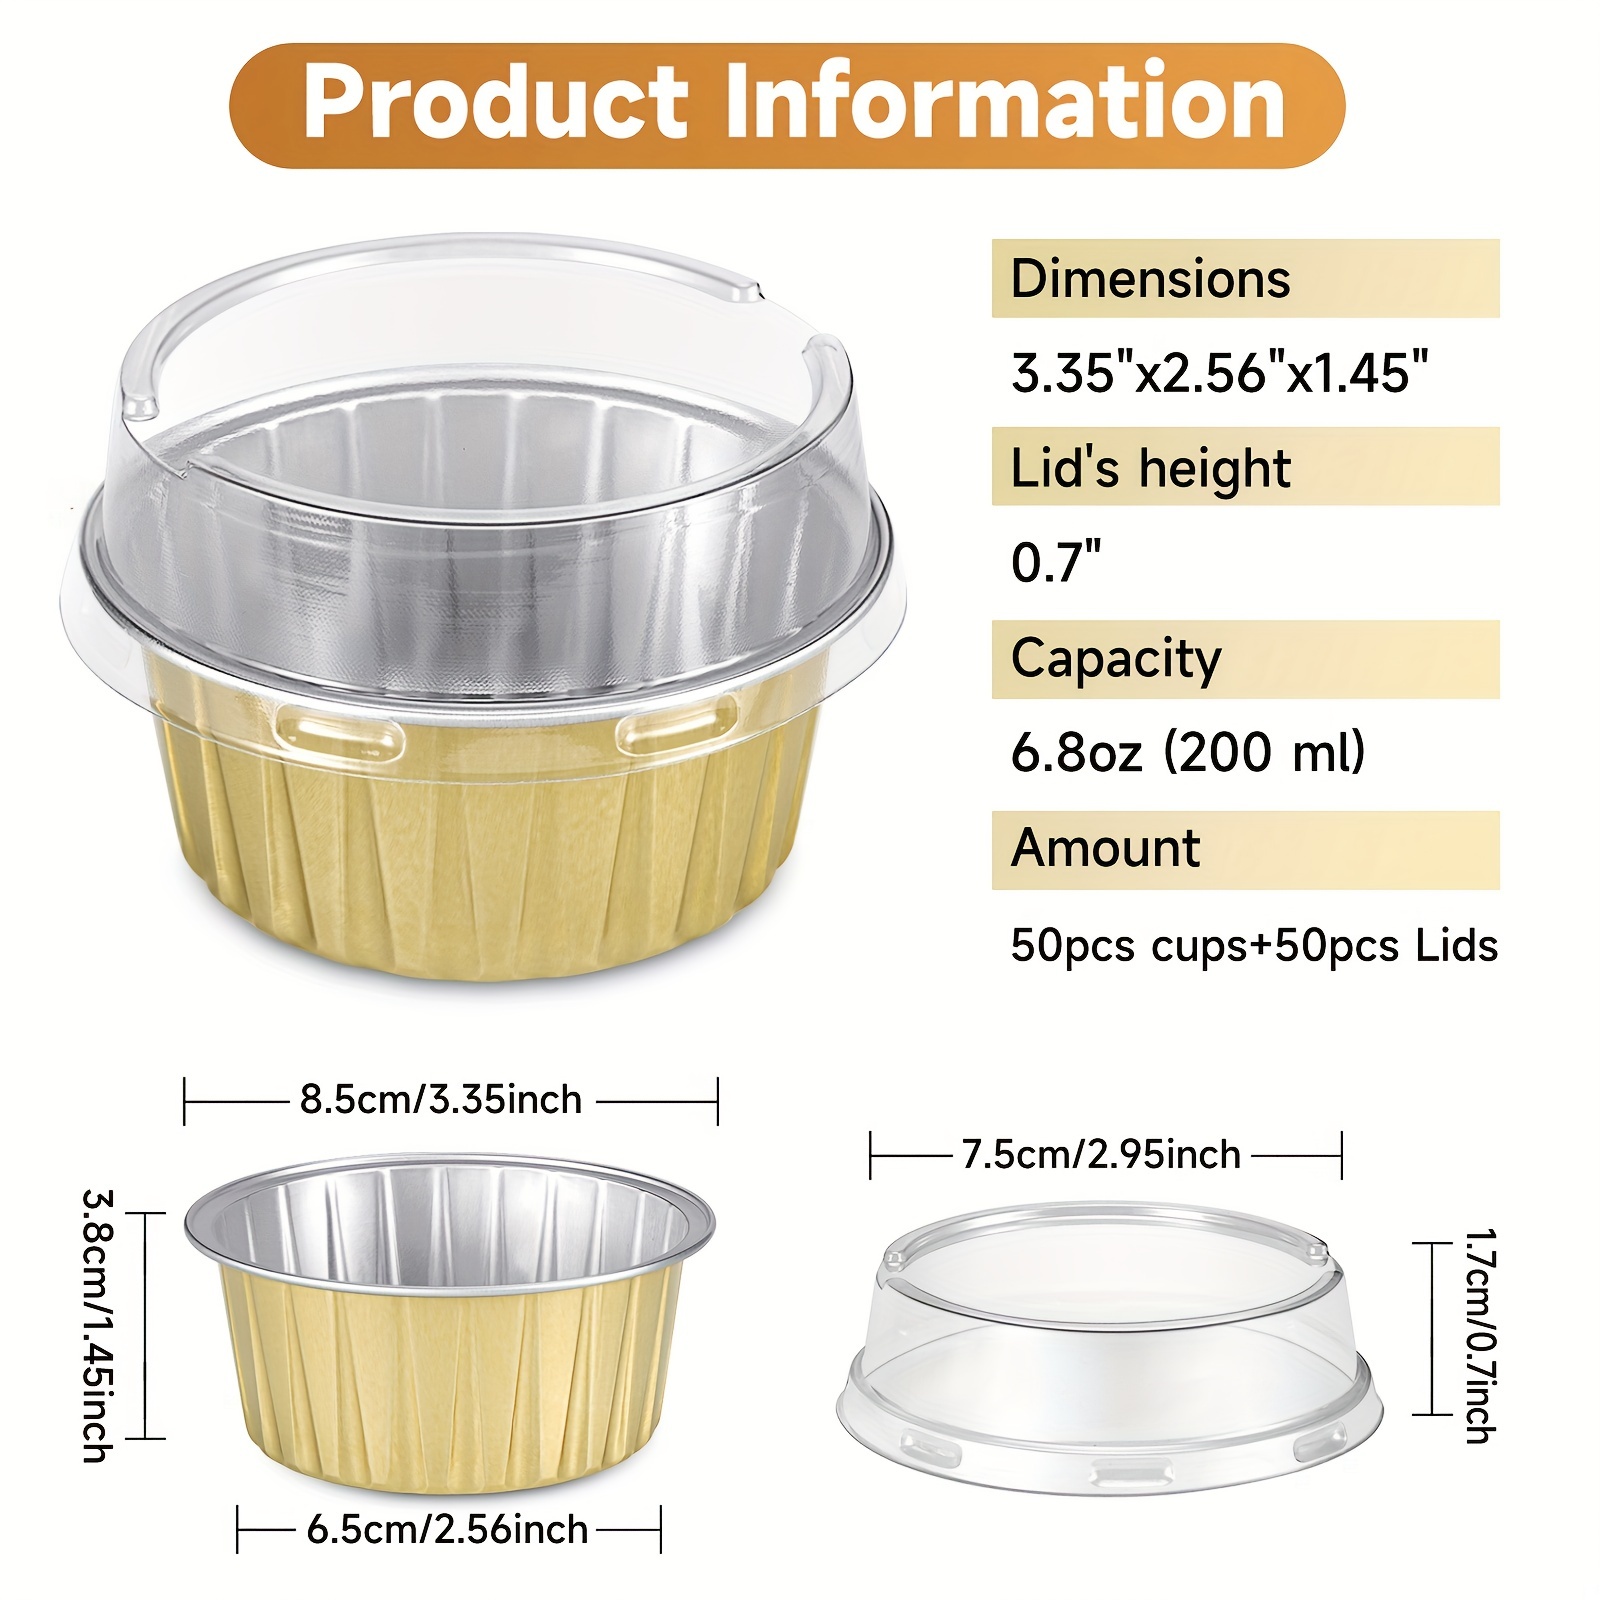 Eoonfirst Aluminum Foil Cupcake Baking Cups, Golden Disposable